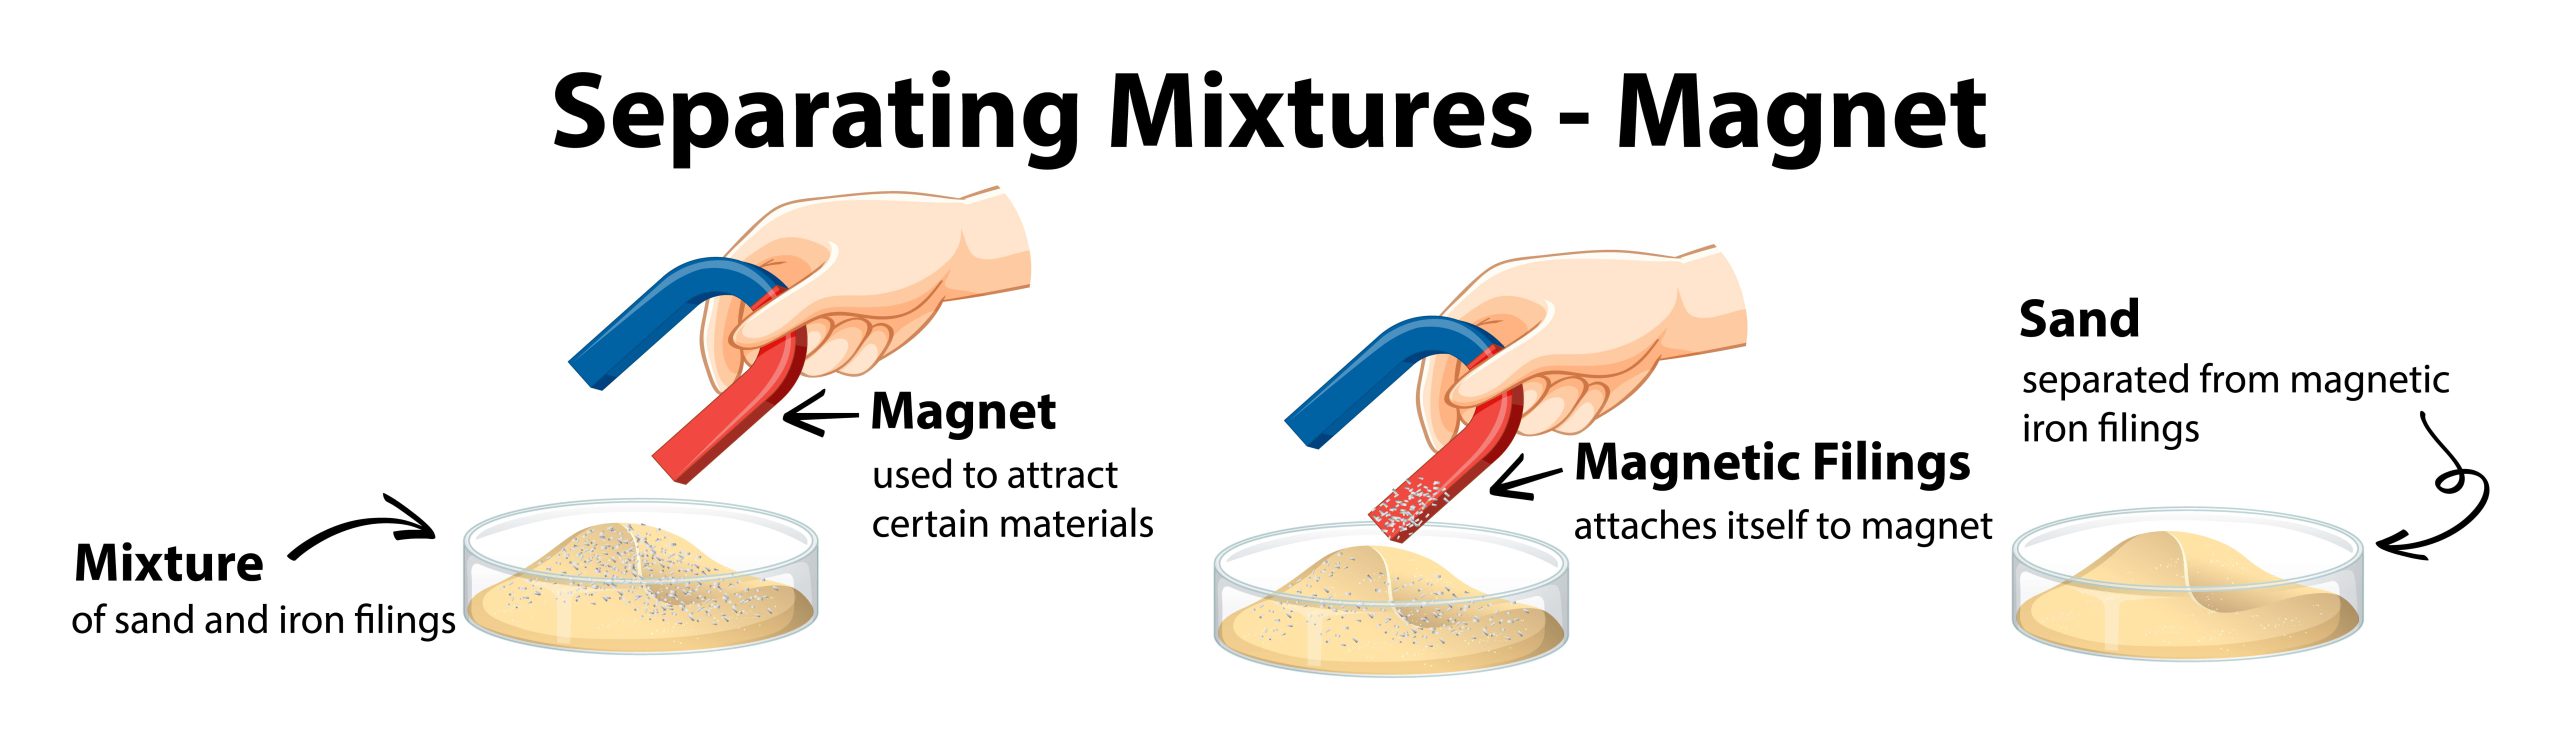 Magnetism - Separating Mixtures